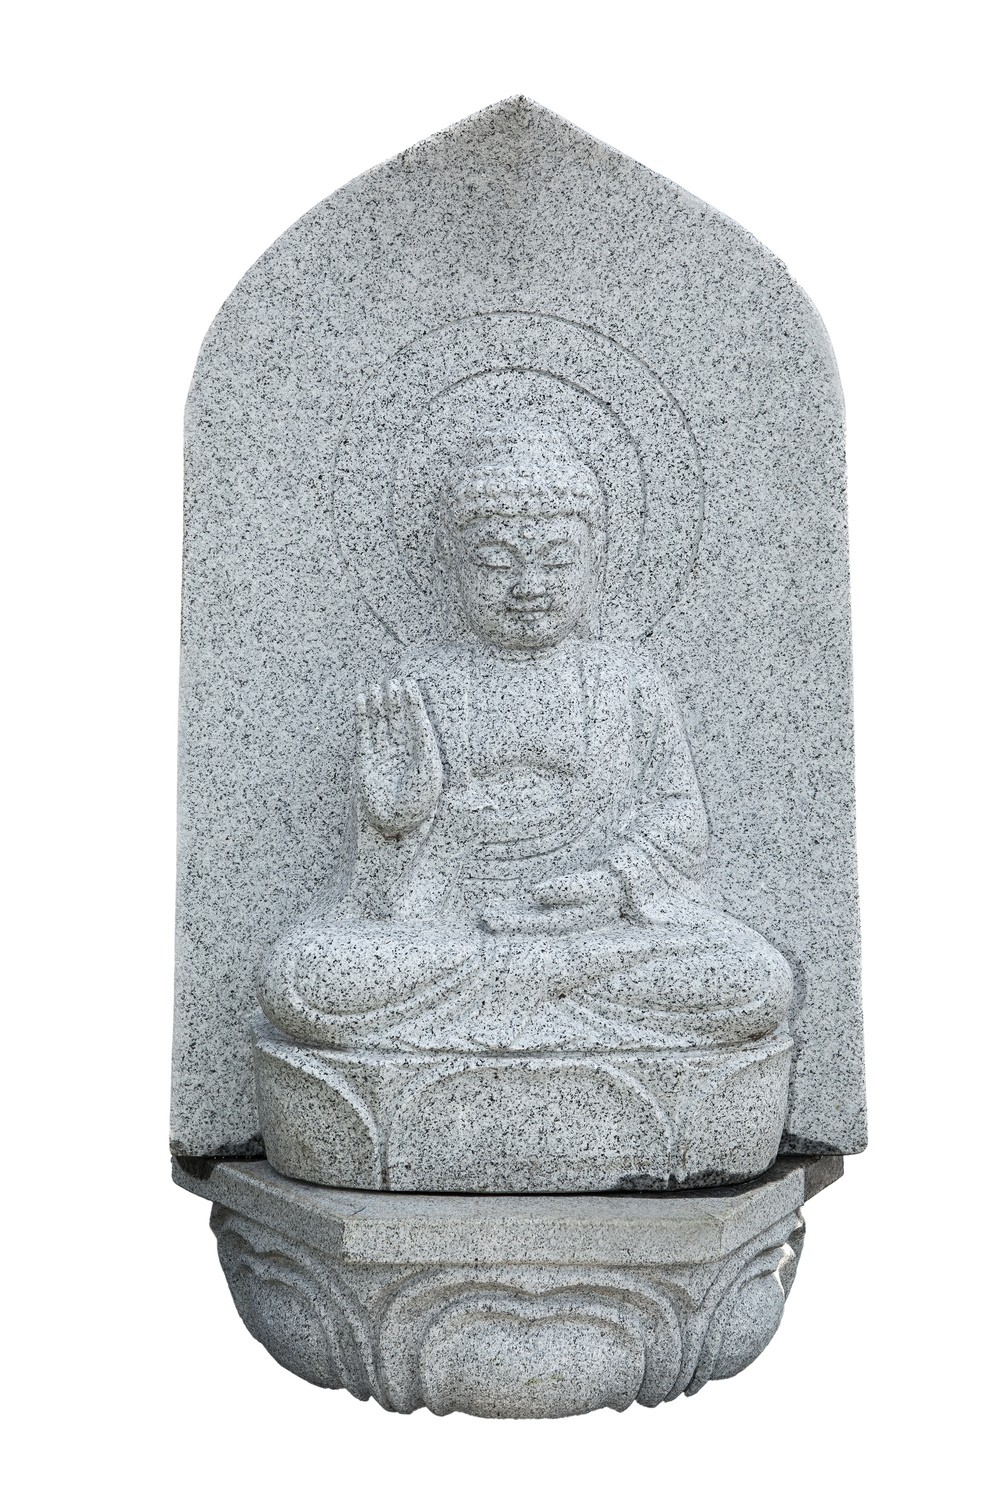 Buddha "Mara" sitzend, mit Rückwand Höhe: 40cm